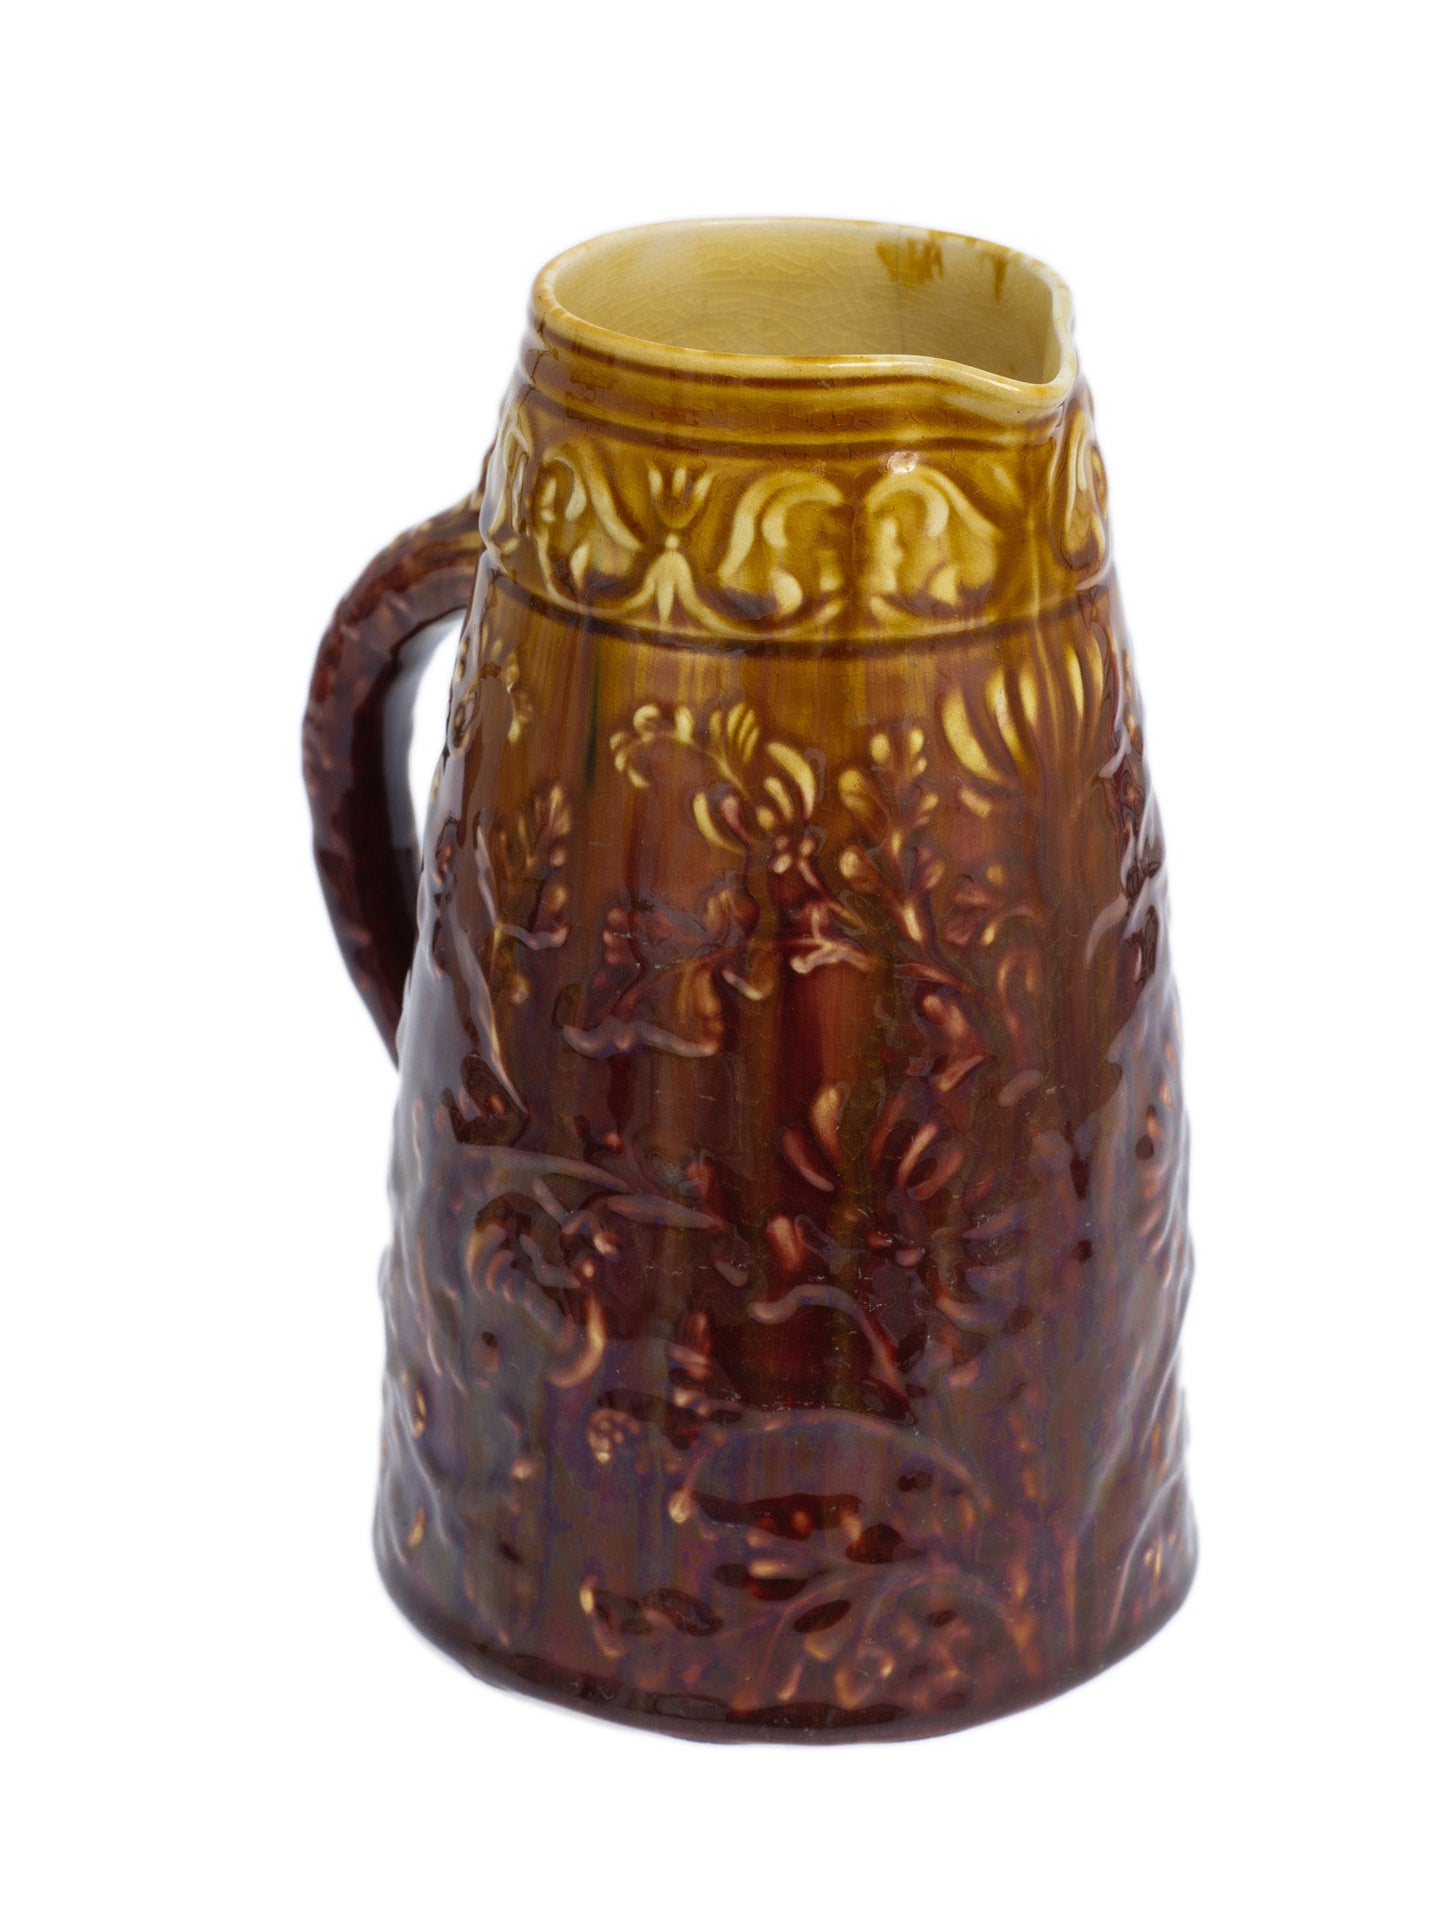 Linthorpe Pottery Antique Treacle Glaze Streak & Ombre Effect Moulded Jug 1880's (Code 2816)